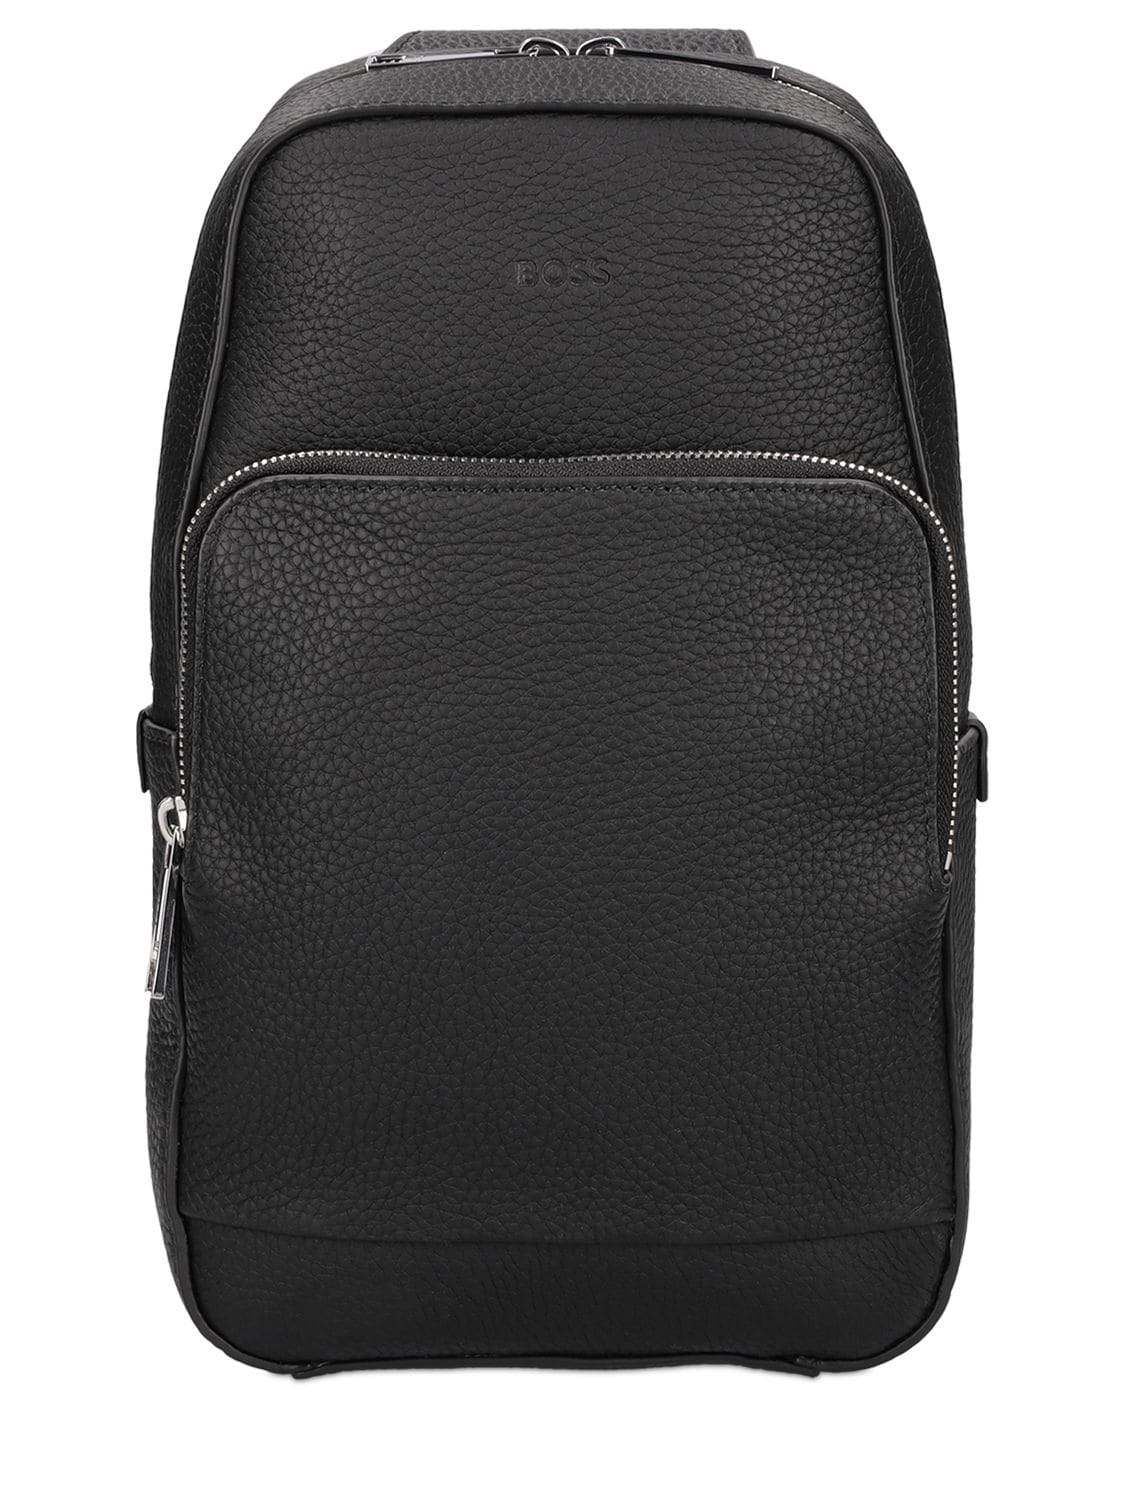 Hugo Boss One-shoulder Leather Backpack In Black | ModeSens